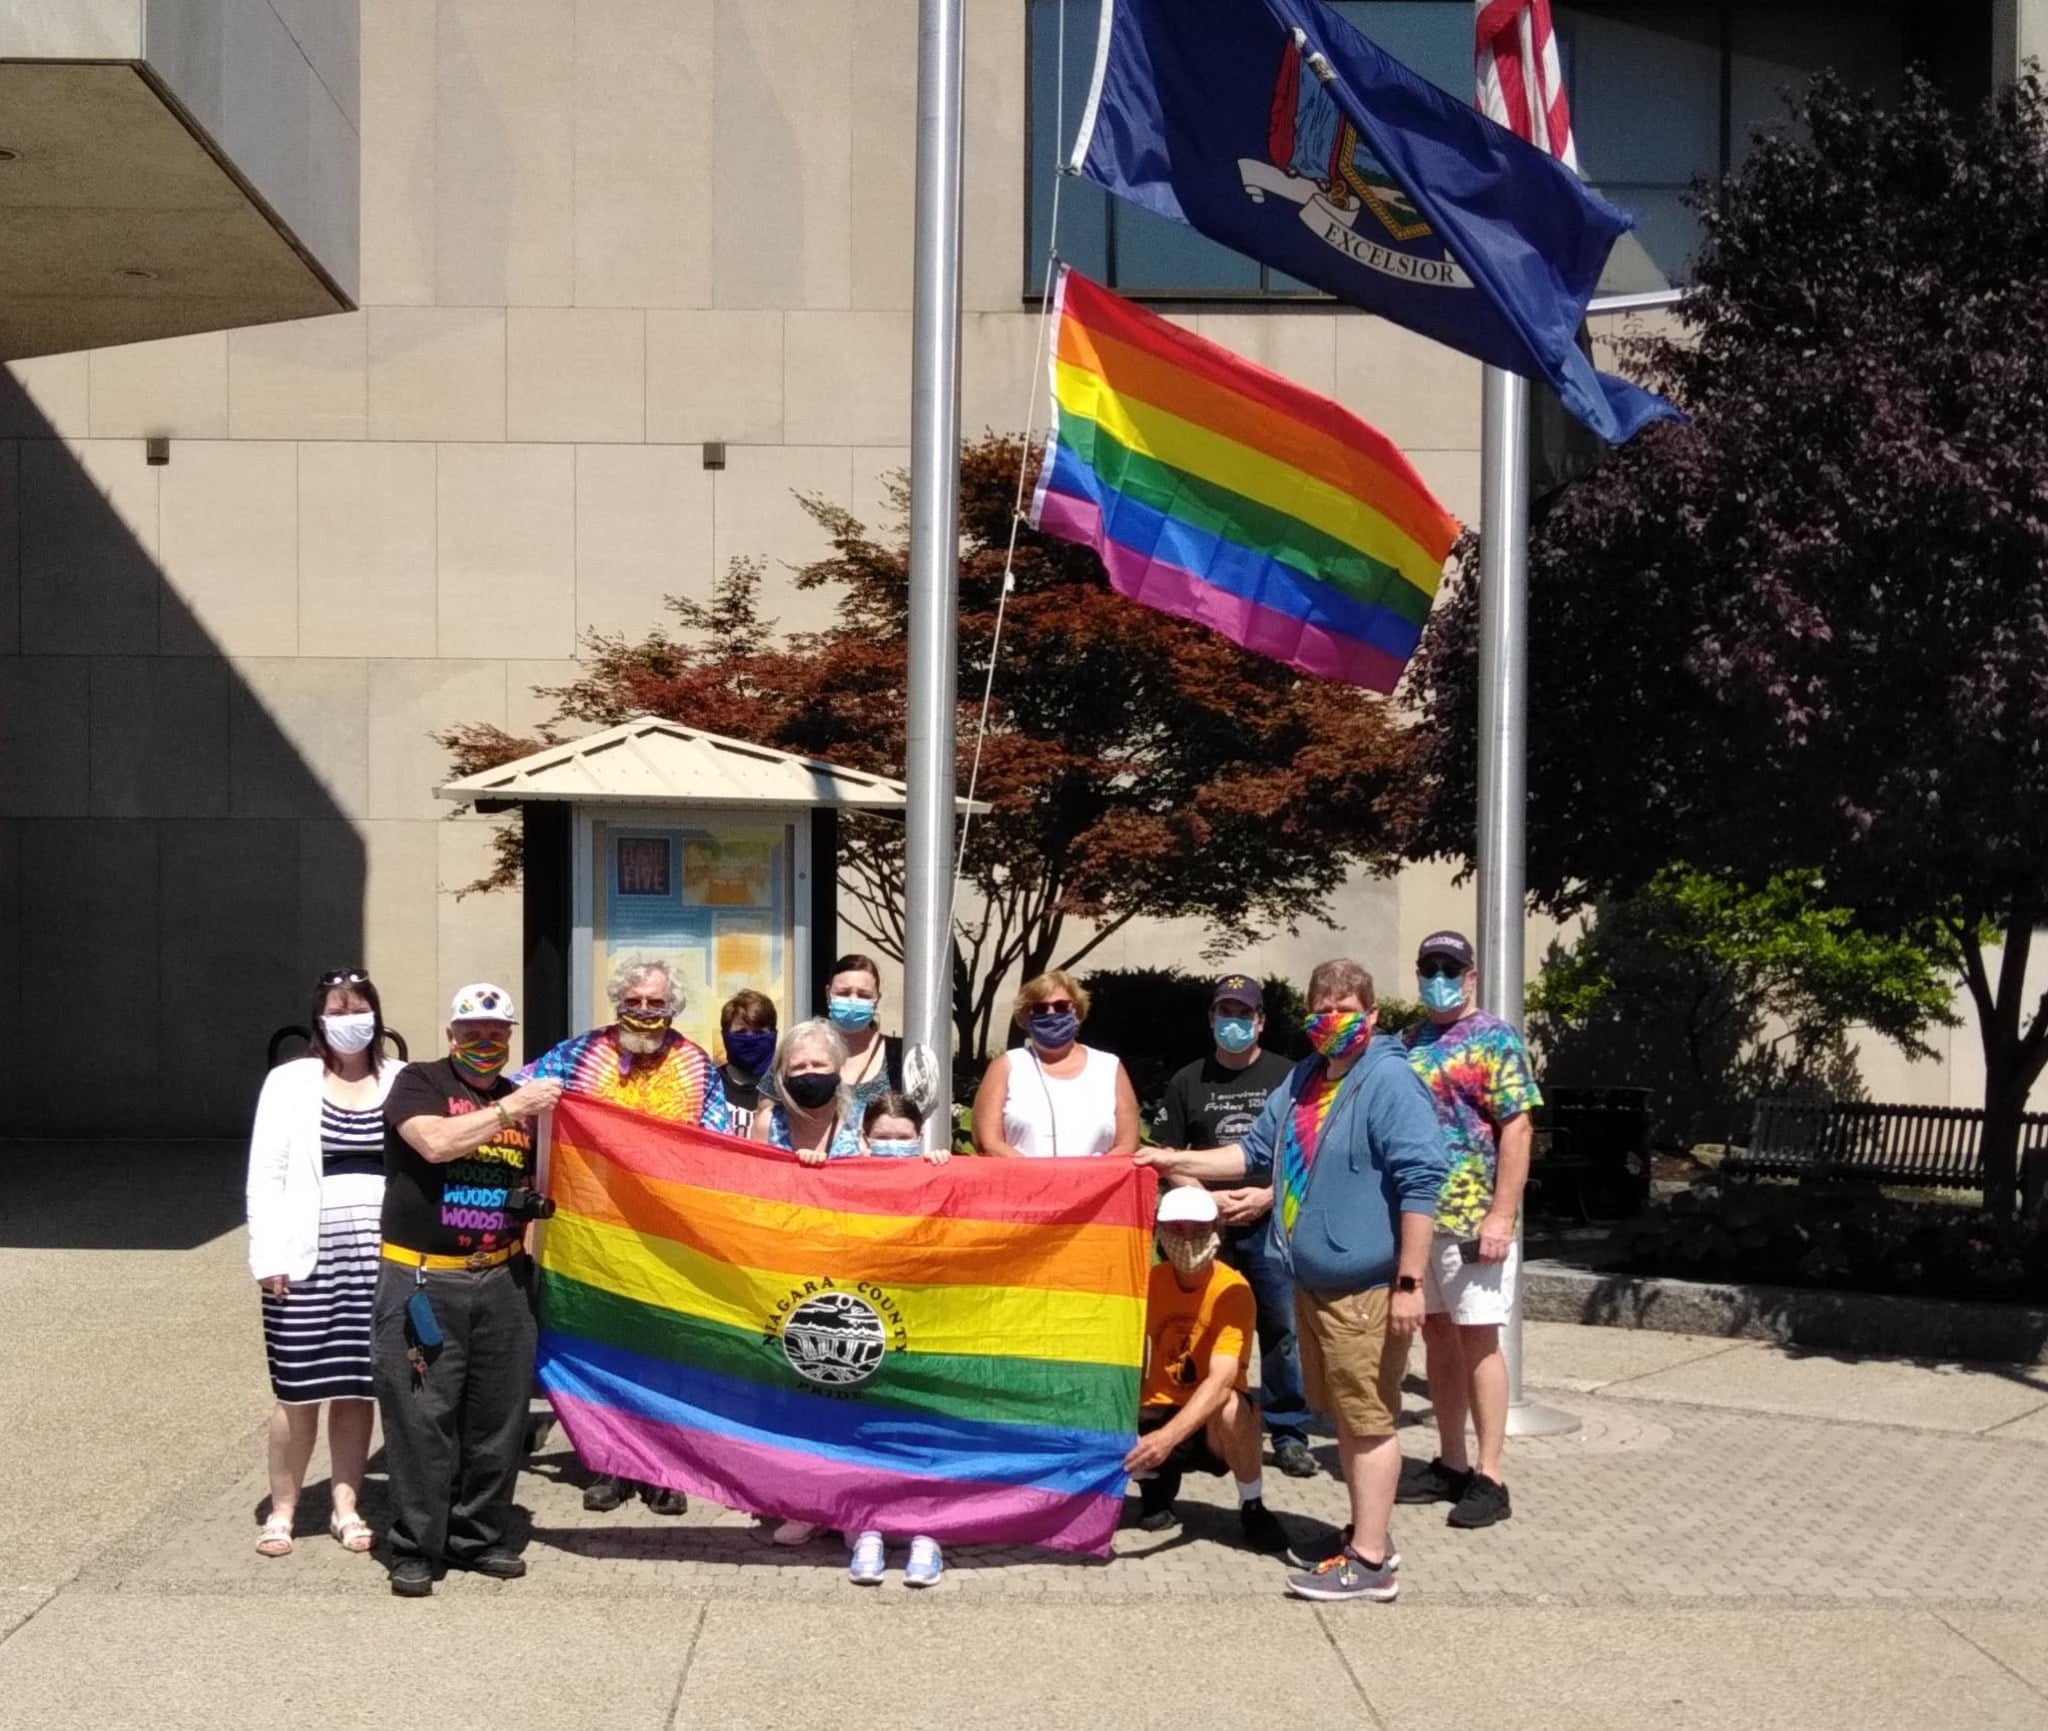 Niagara Pride in action. (File photo)